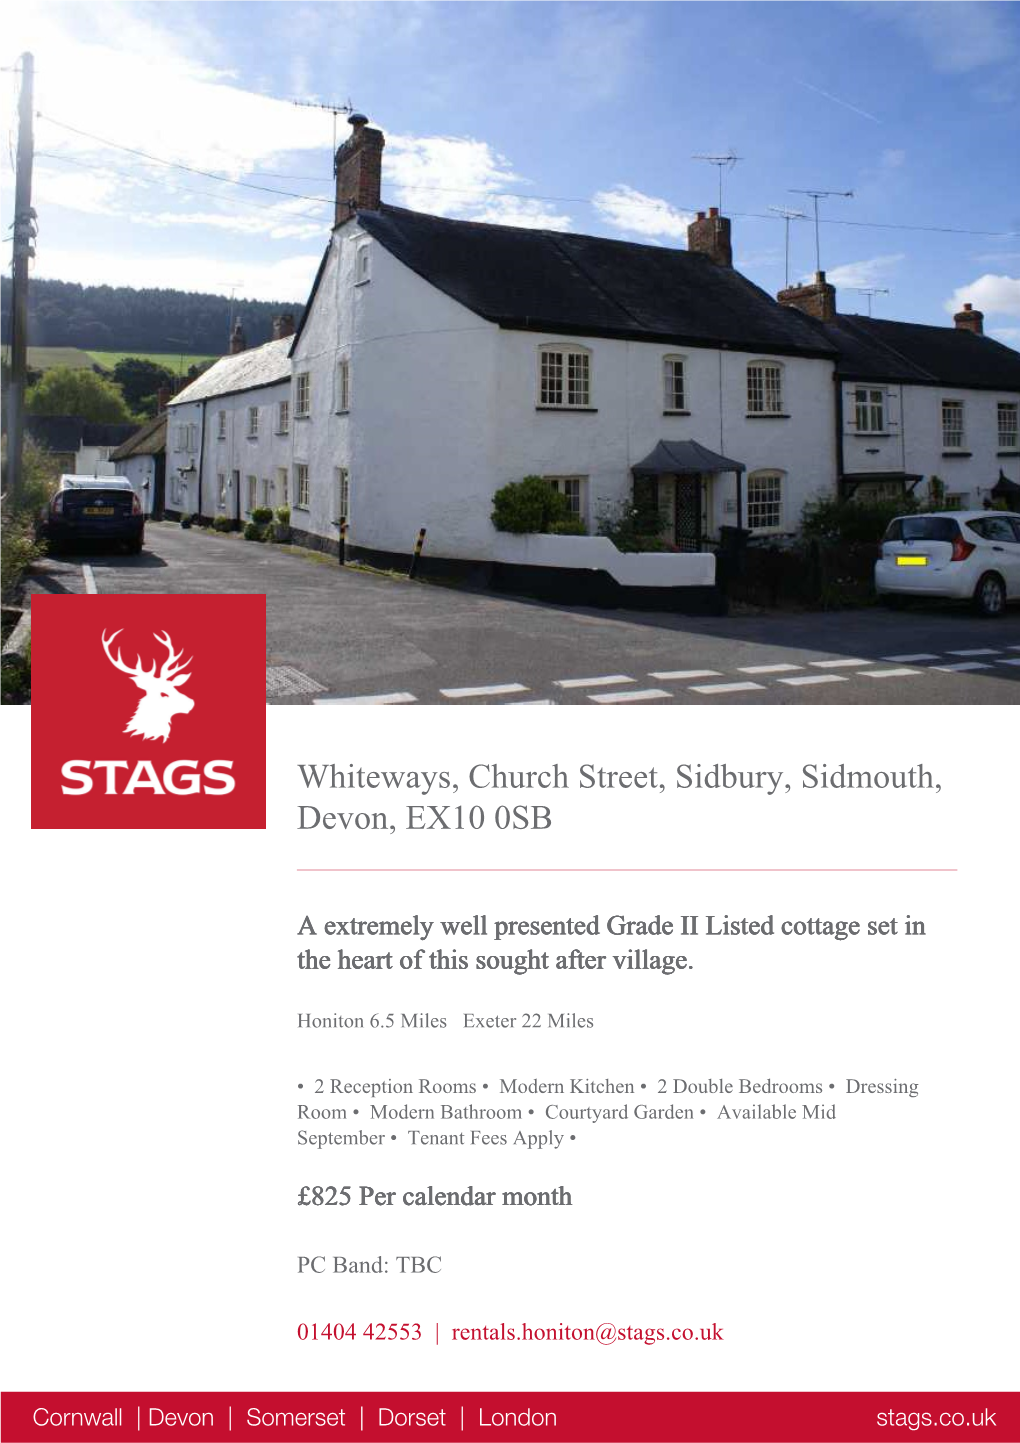 Whiteways, Church Street, Sidbury, Sidmouth, Devon, EX10 0SB